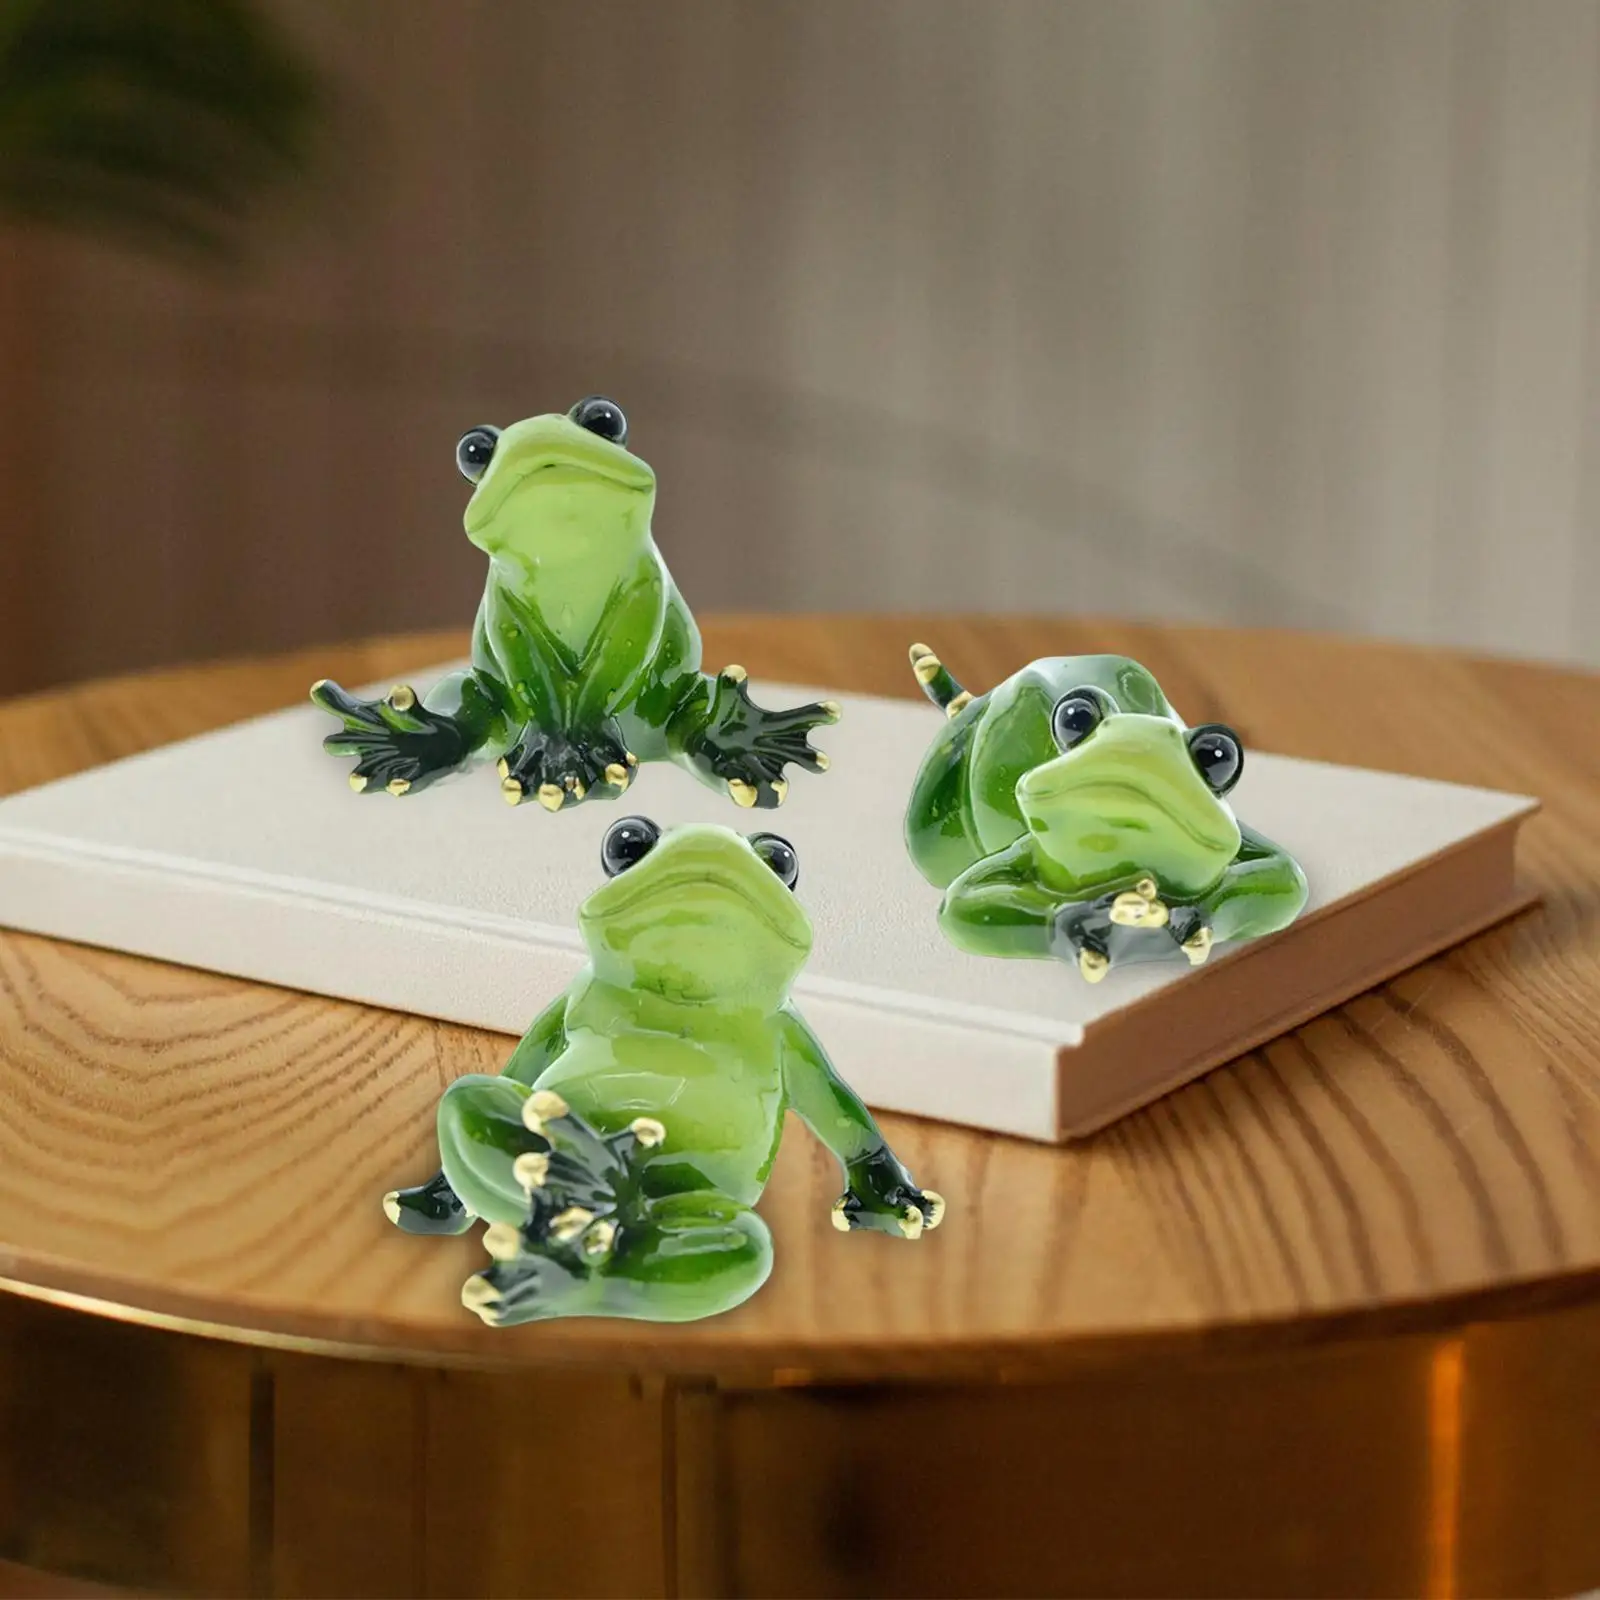 3x Cute Frog Figurines Handicraft Sculpture Animal Resin Miniature Ornament for Hotel Desktop Garden Office Decoration